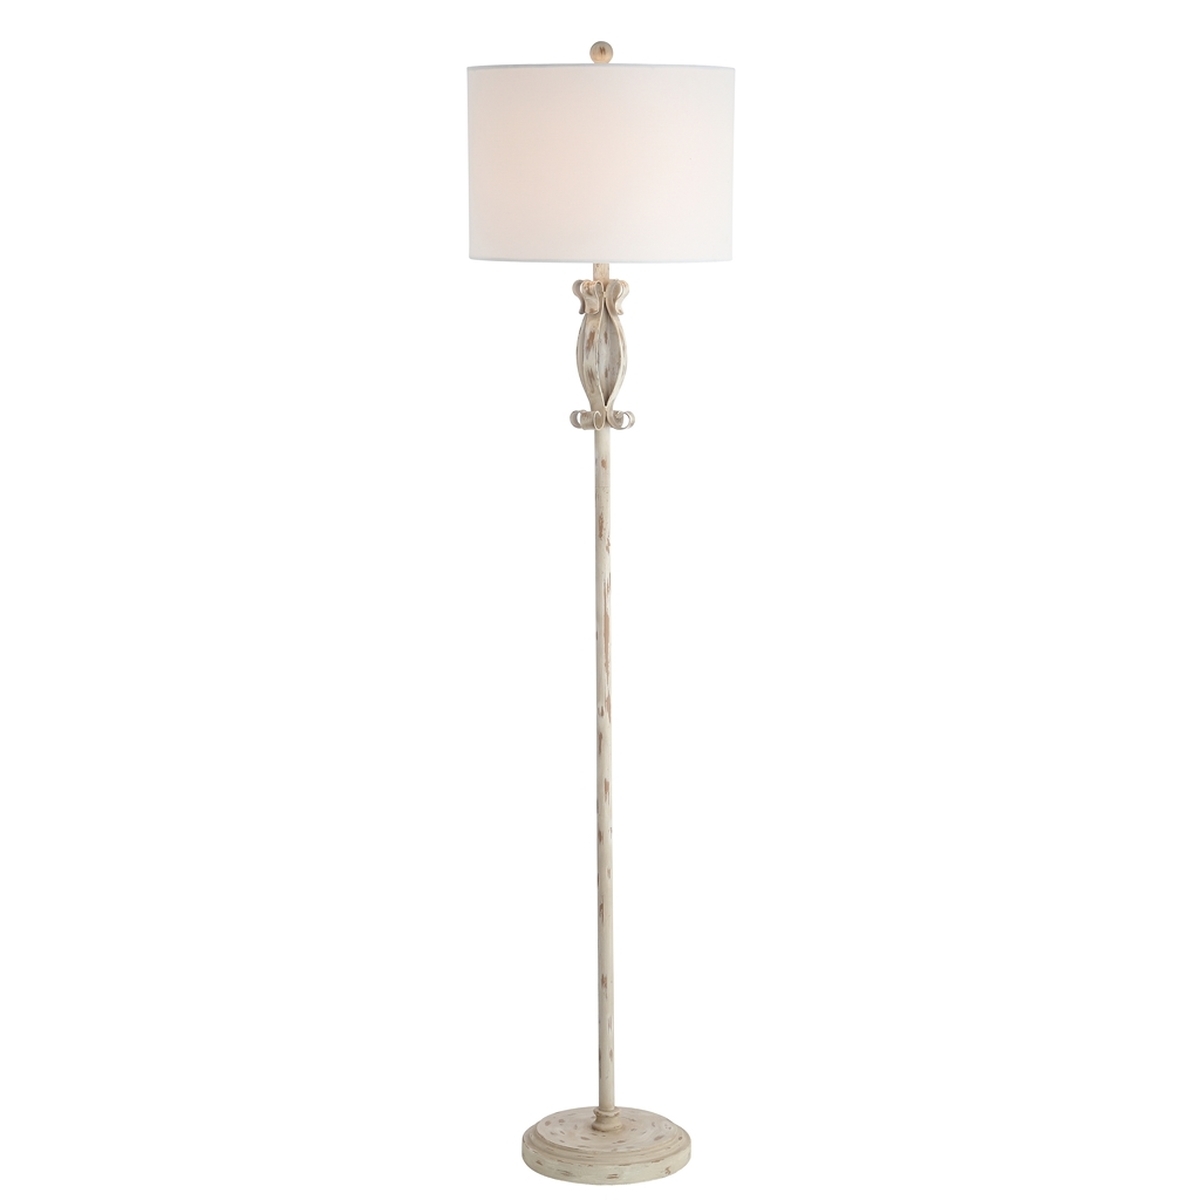 Philippa Floor Lamp - White Washed - Arlo Home - Image 1